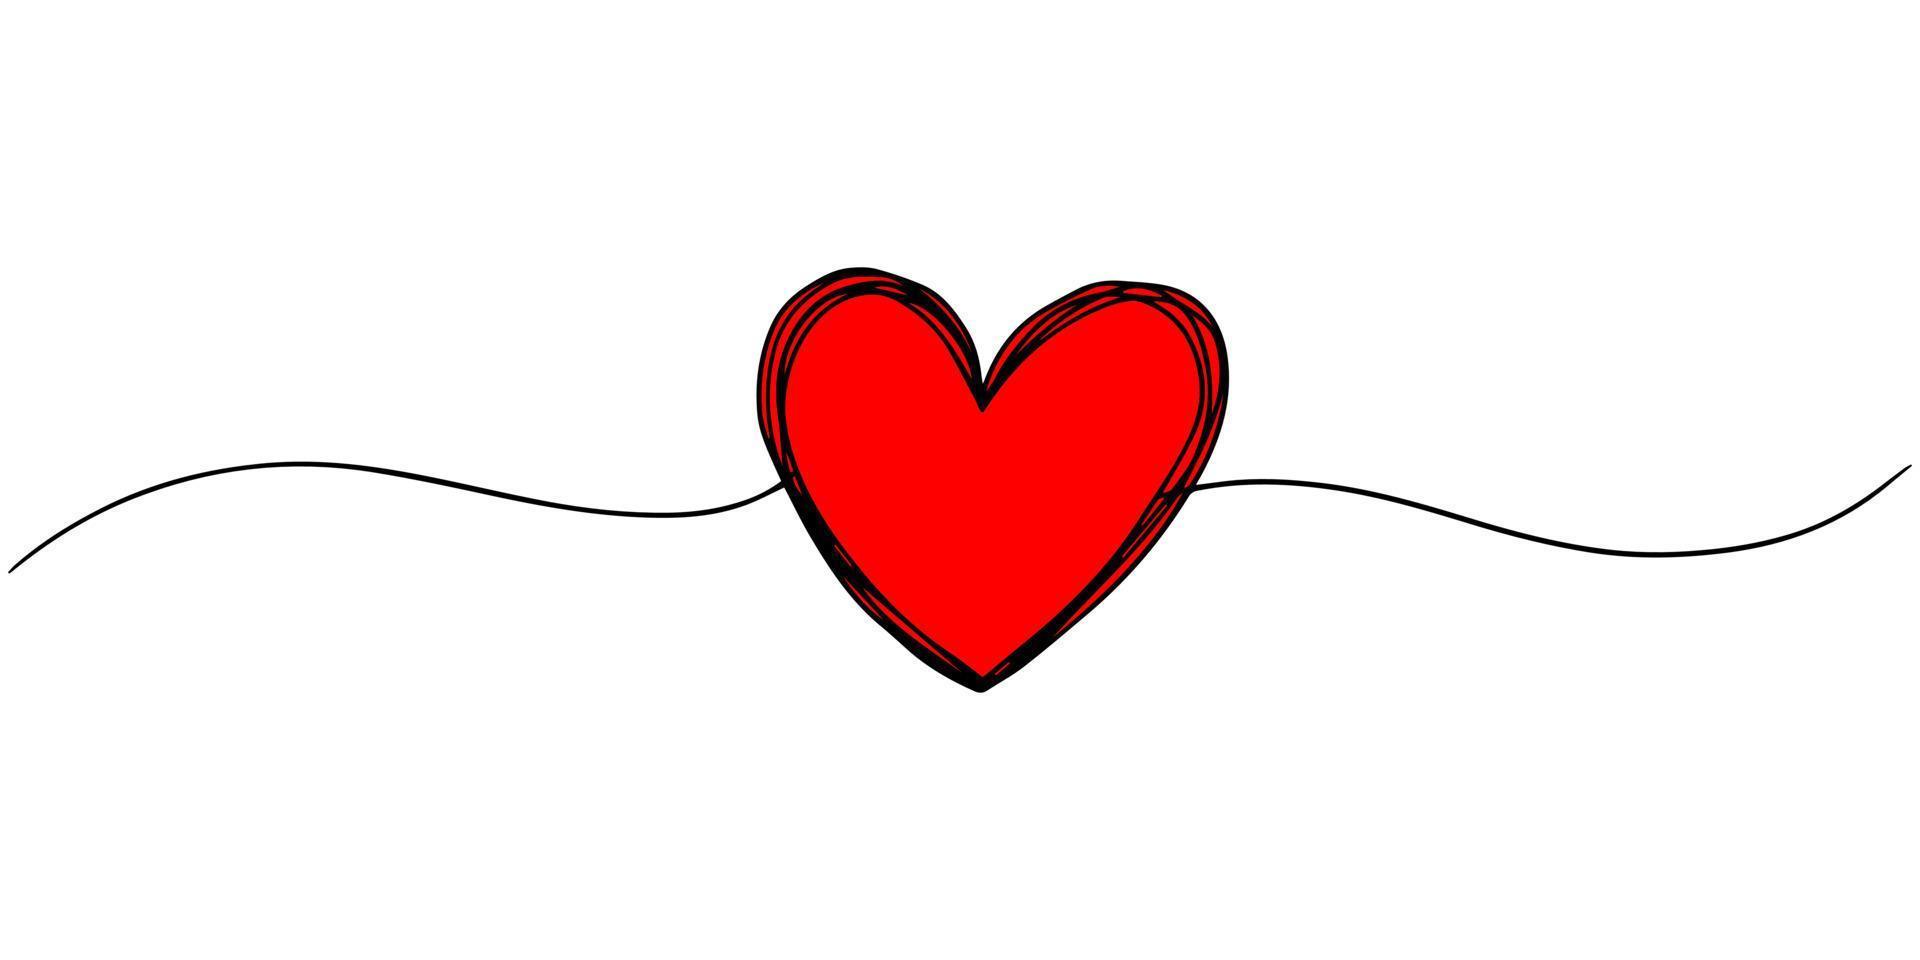 corazón dibujado a mano con línea delgada, forma divisoria, garabato redondo grungy enredado aislado en fondo blanco.ilustración vectorial vector